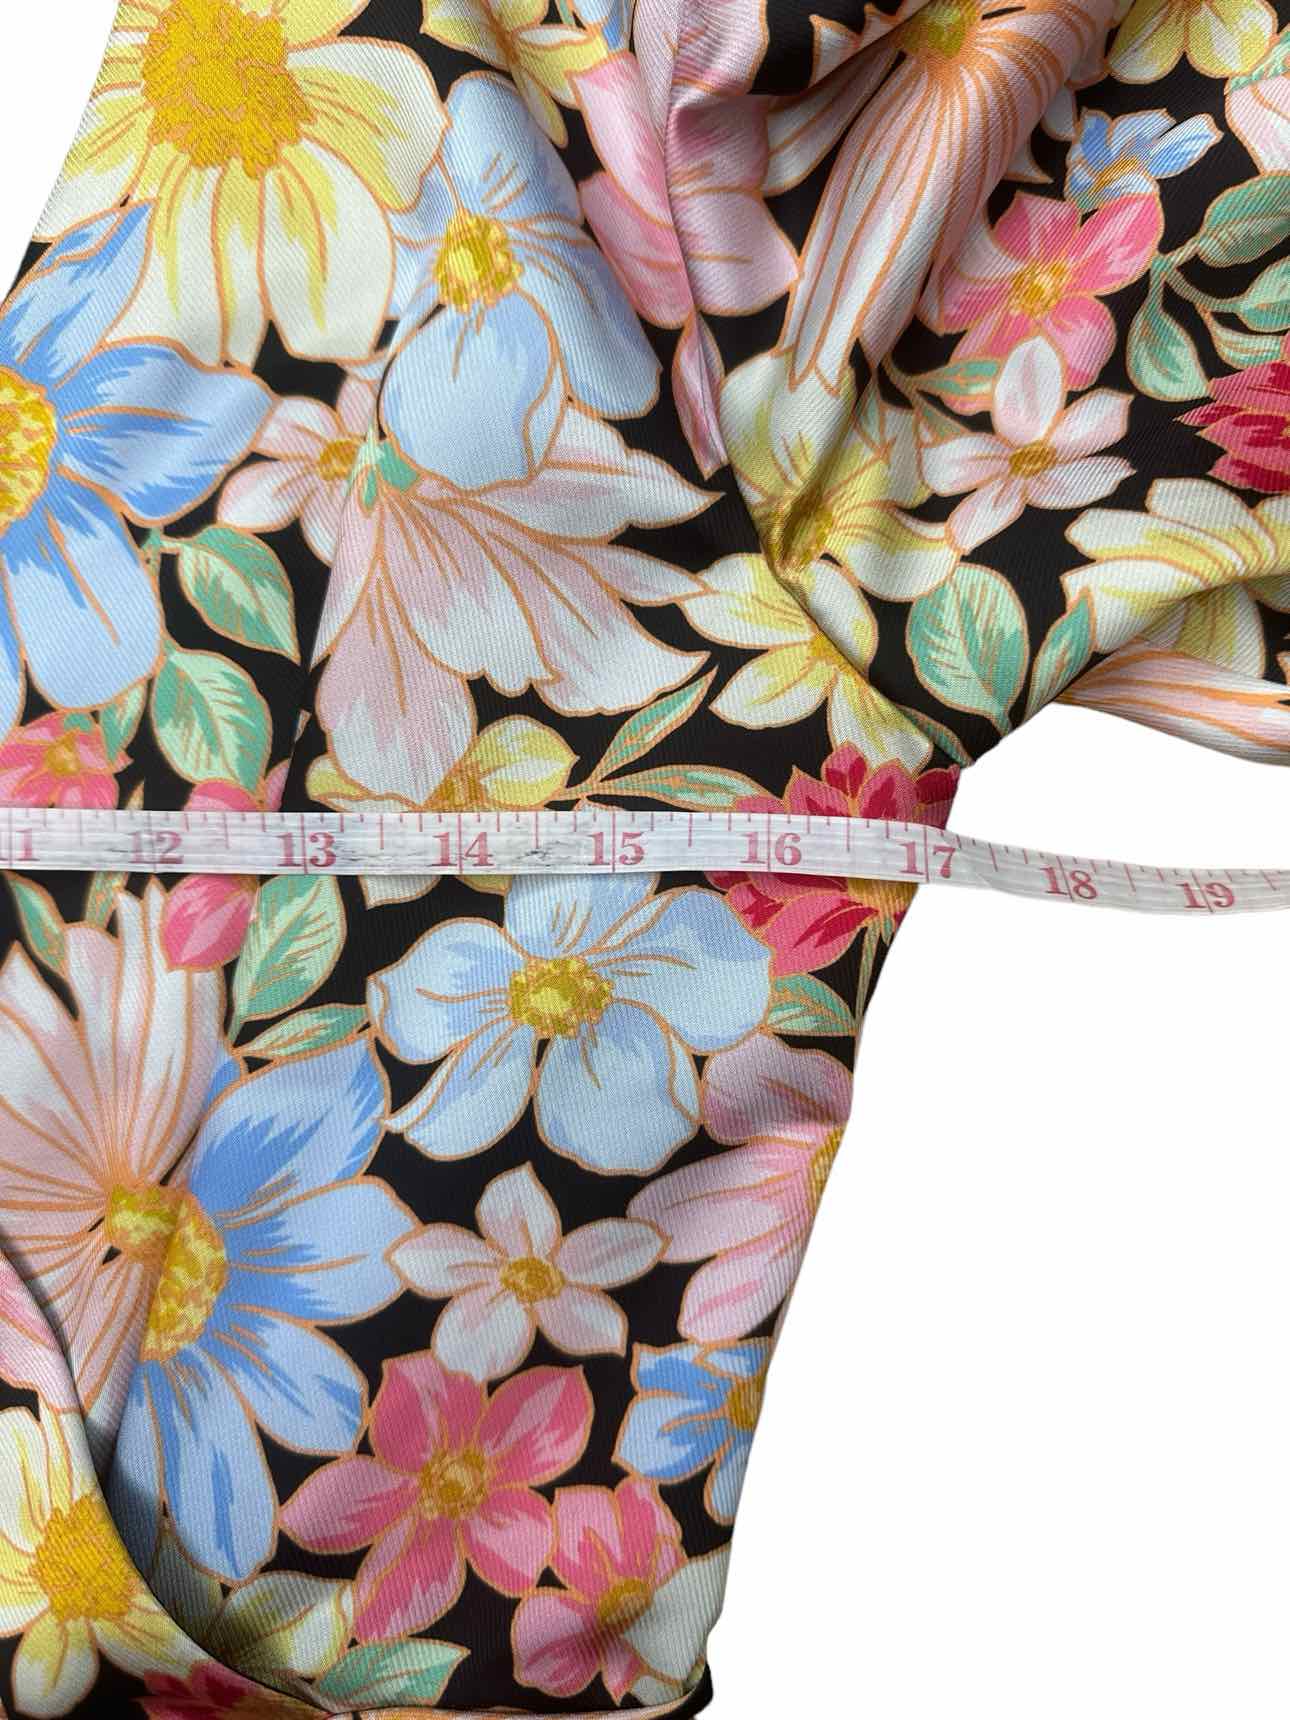 KEEPSAKE Multi-colored Floral Print Dress Size XS